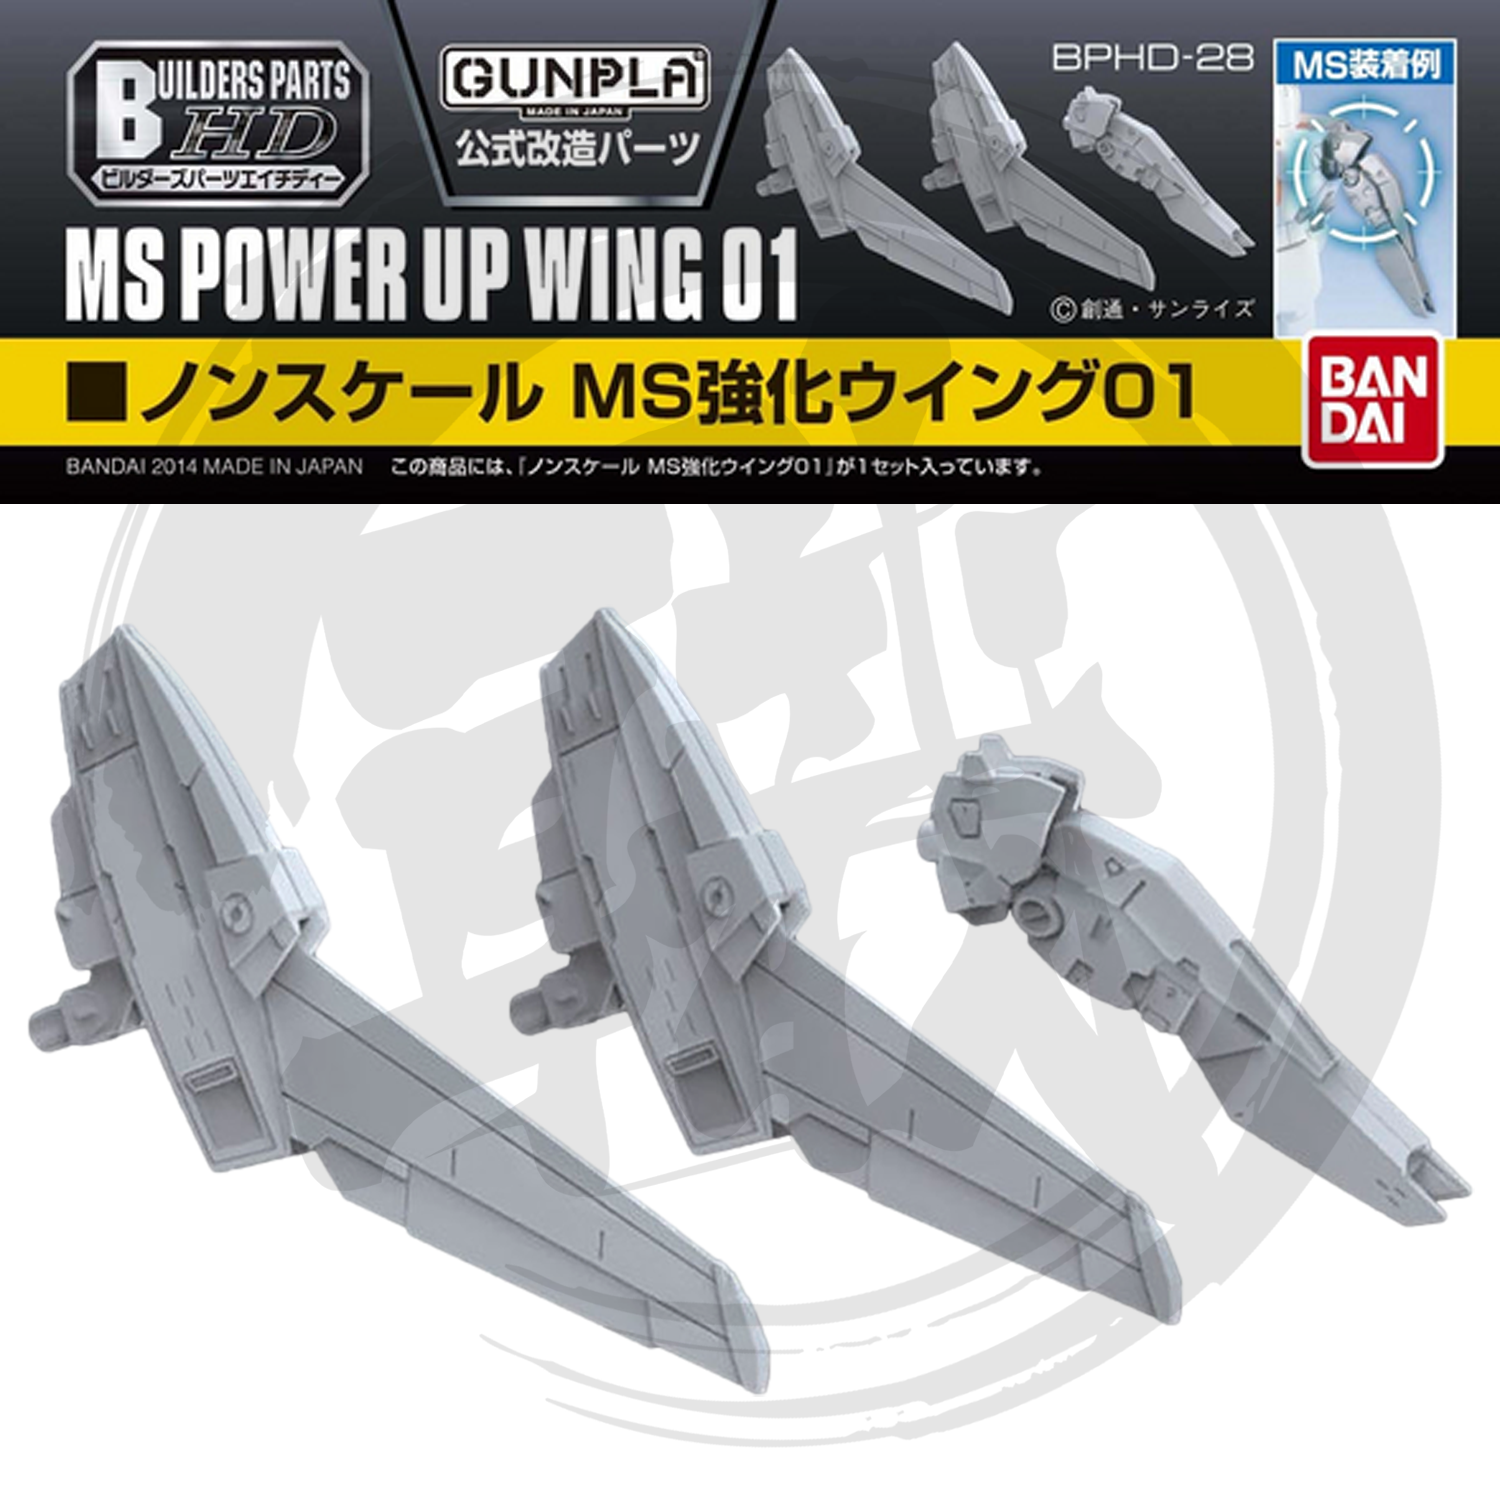 [BPHD-28] MS Power Up Wing 01 [Non-Scale] - ShokuninGunpla